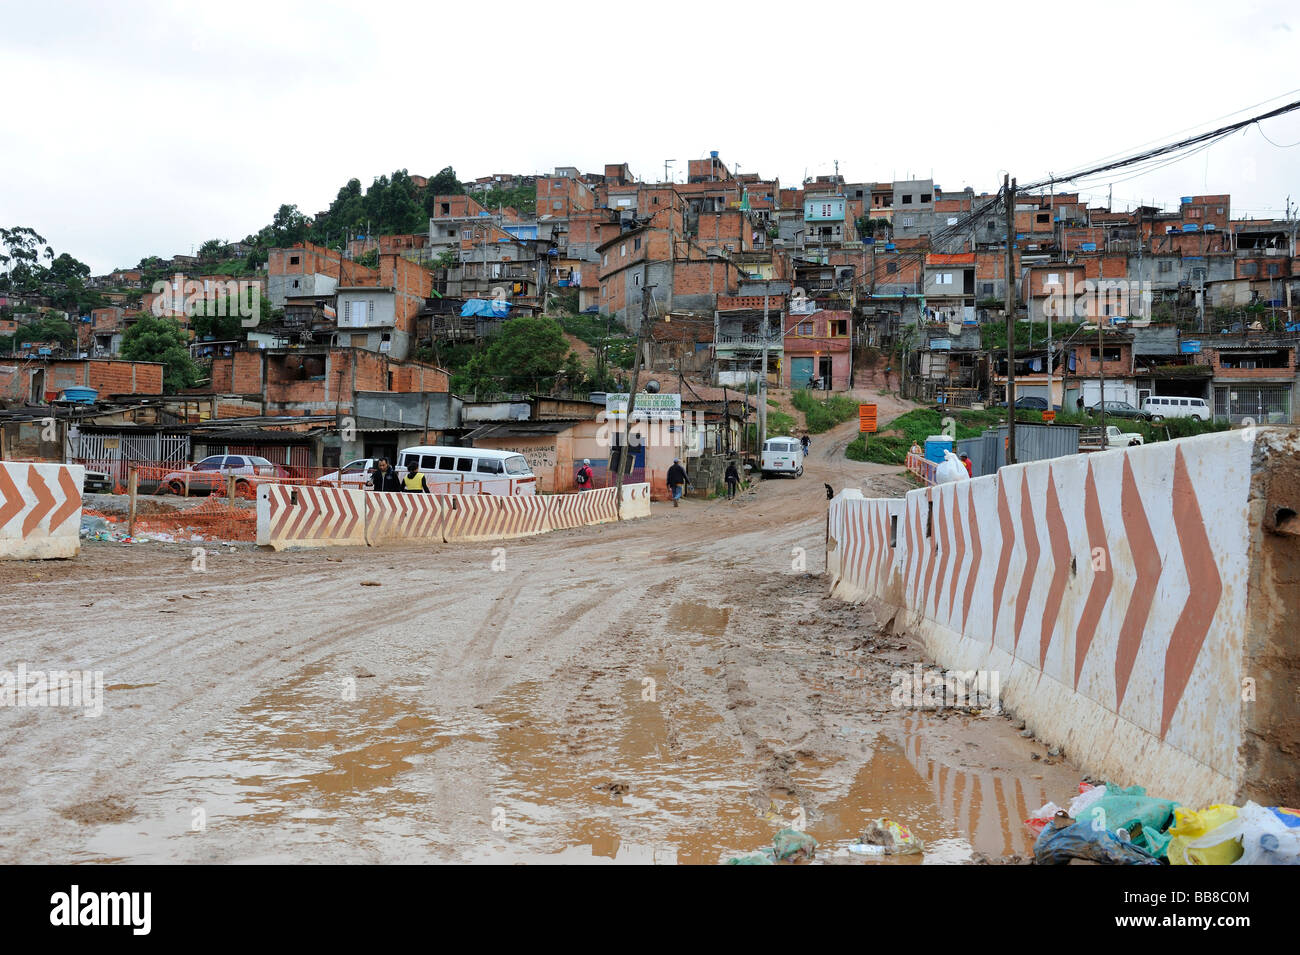 Favela slum in Sao Paulo, Brazil Stock Photo